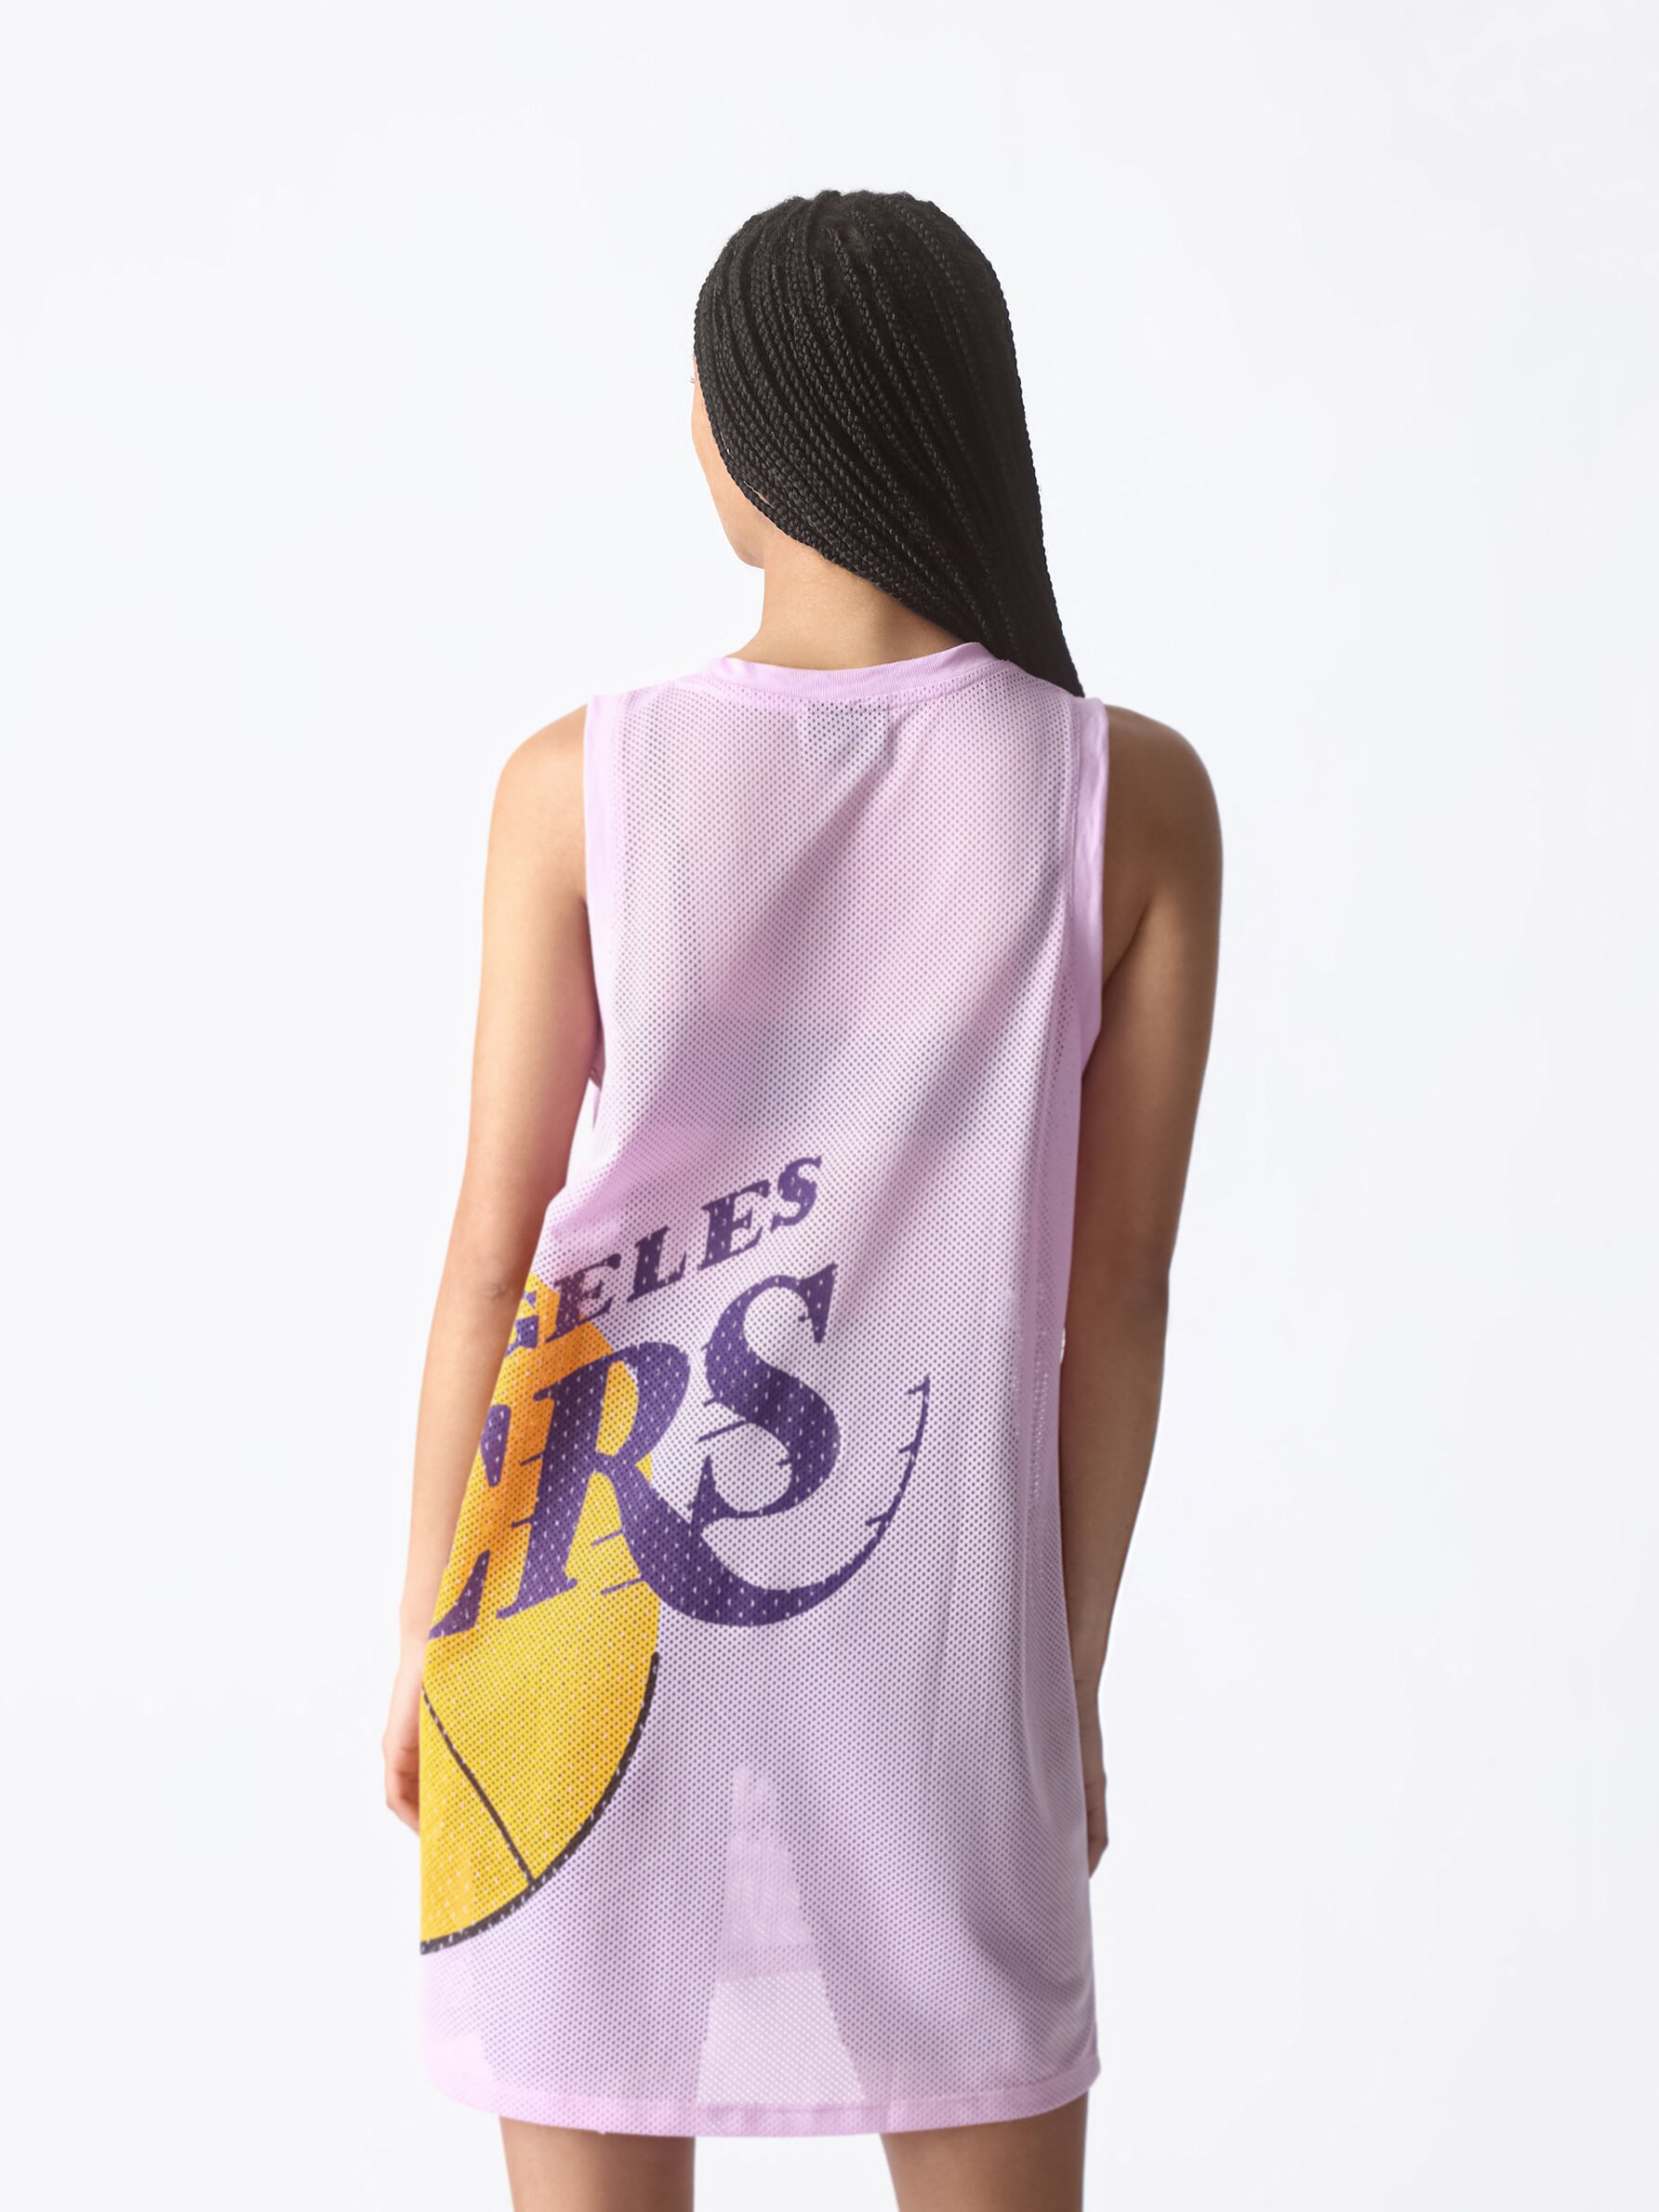 Los Angeles Lakers NBA dress - Dresses - CLOTHING - Woman